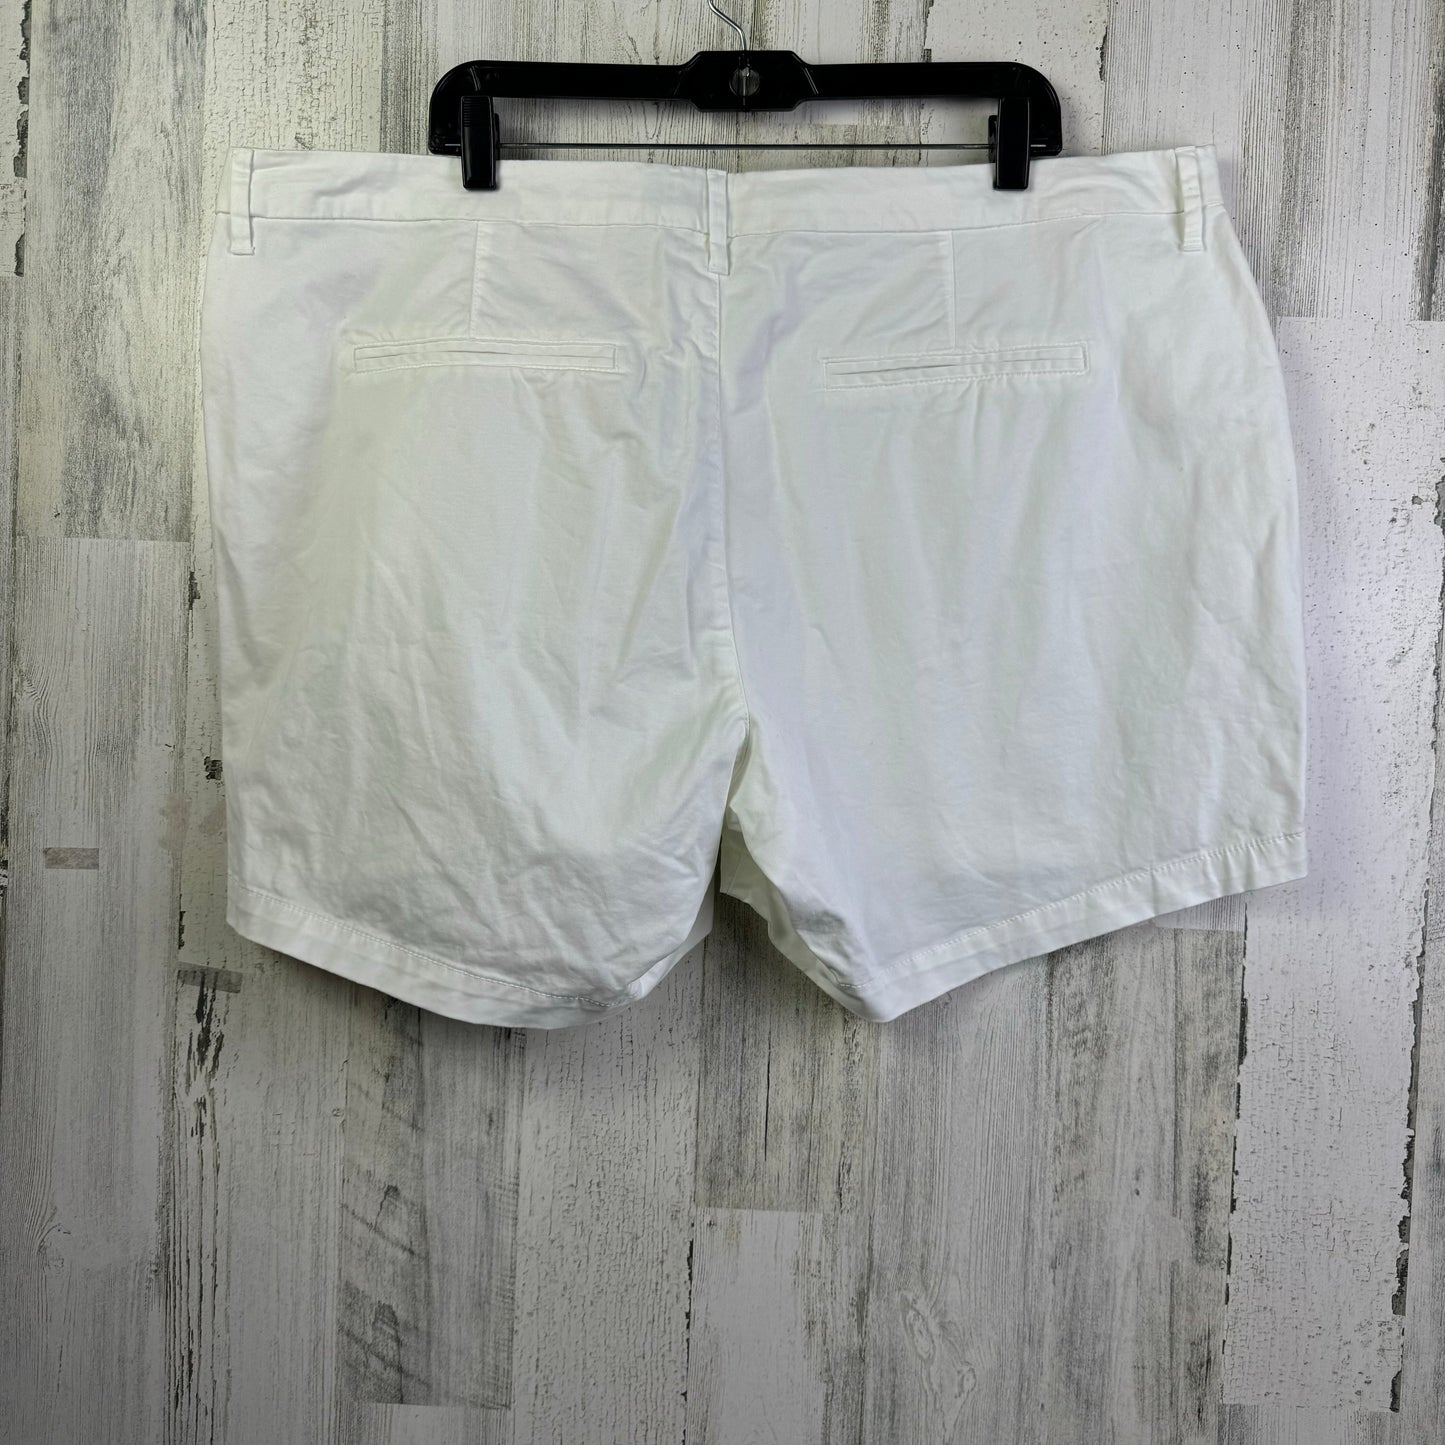 White Shorts Old Navy, Size 20